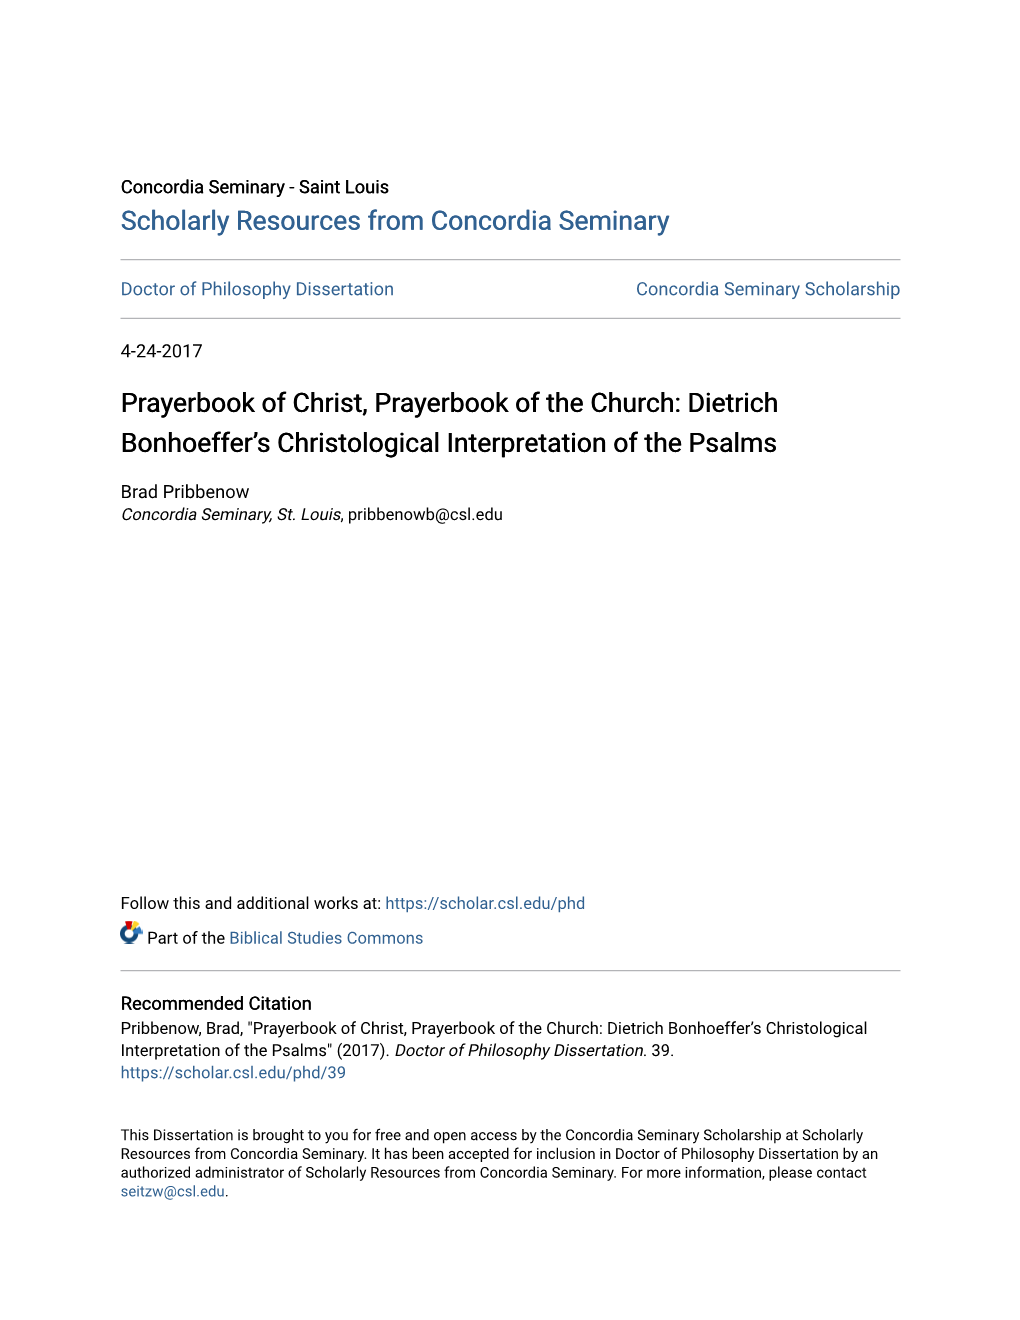 Prayerbook of Christ, Prayerbook of the Church: Dietrich Bonhoeffer's Christological Interpretation of the Psalms